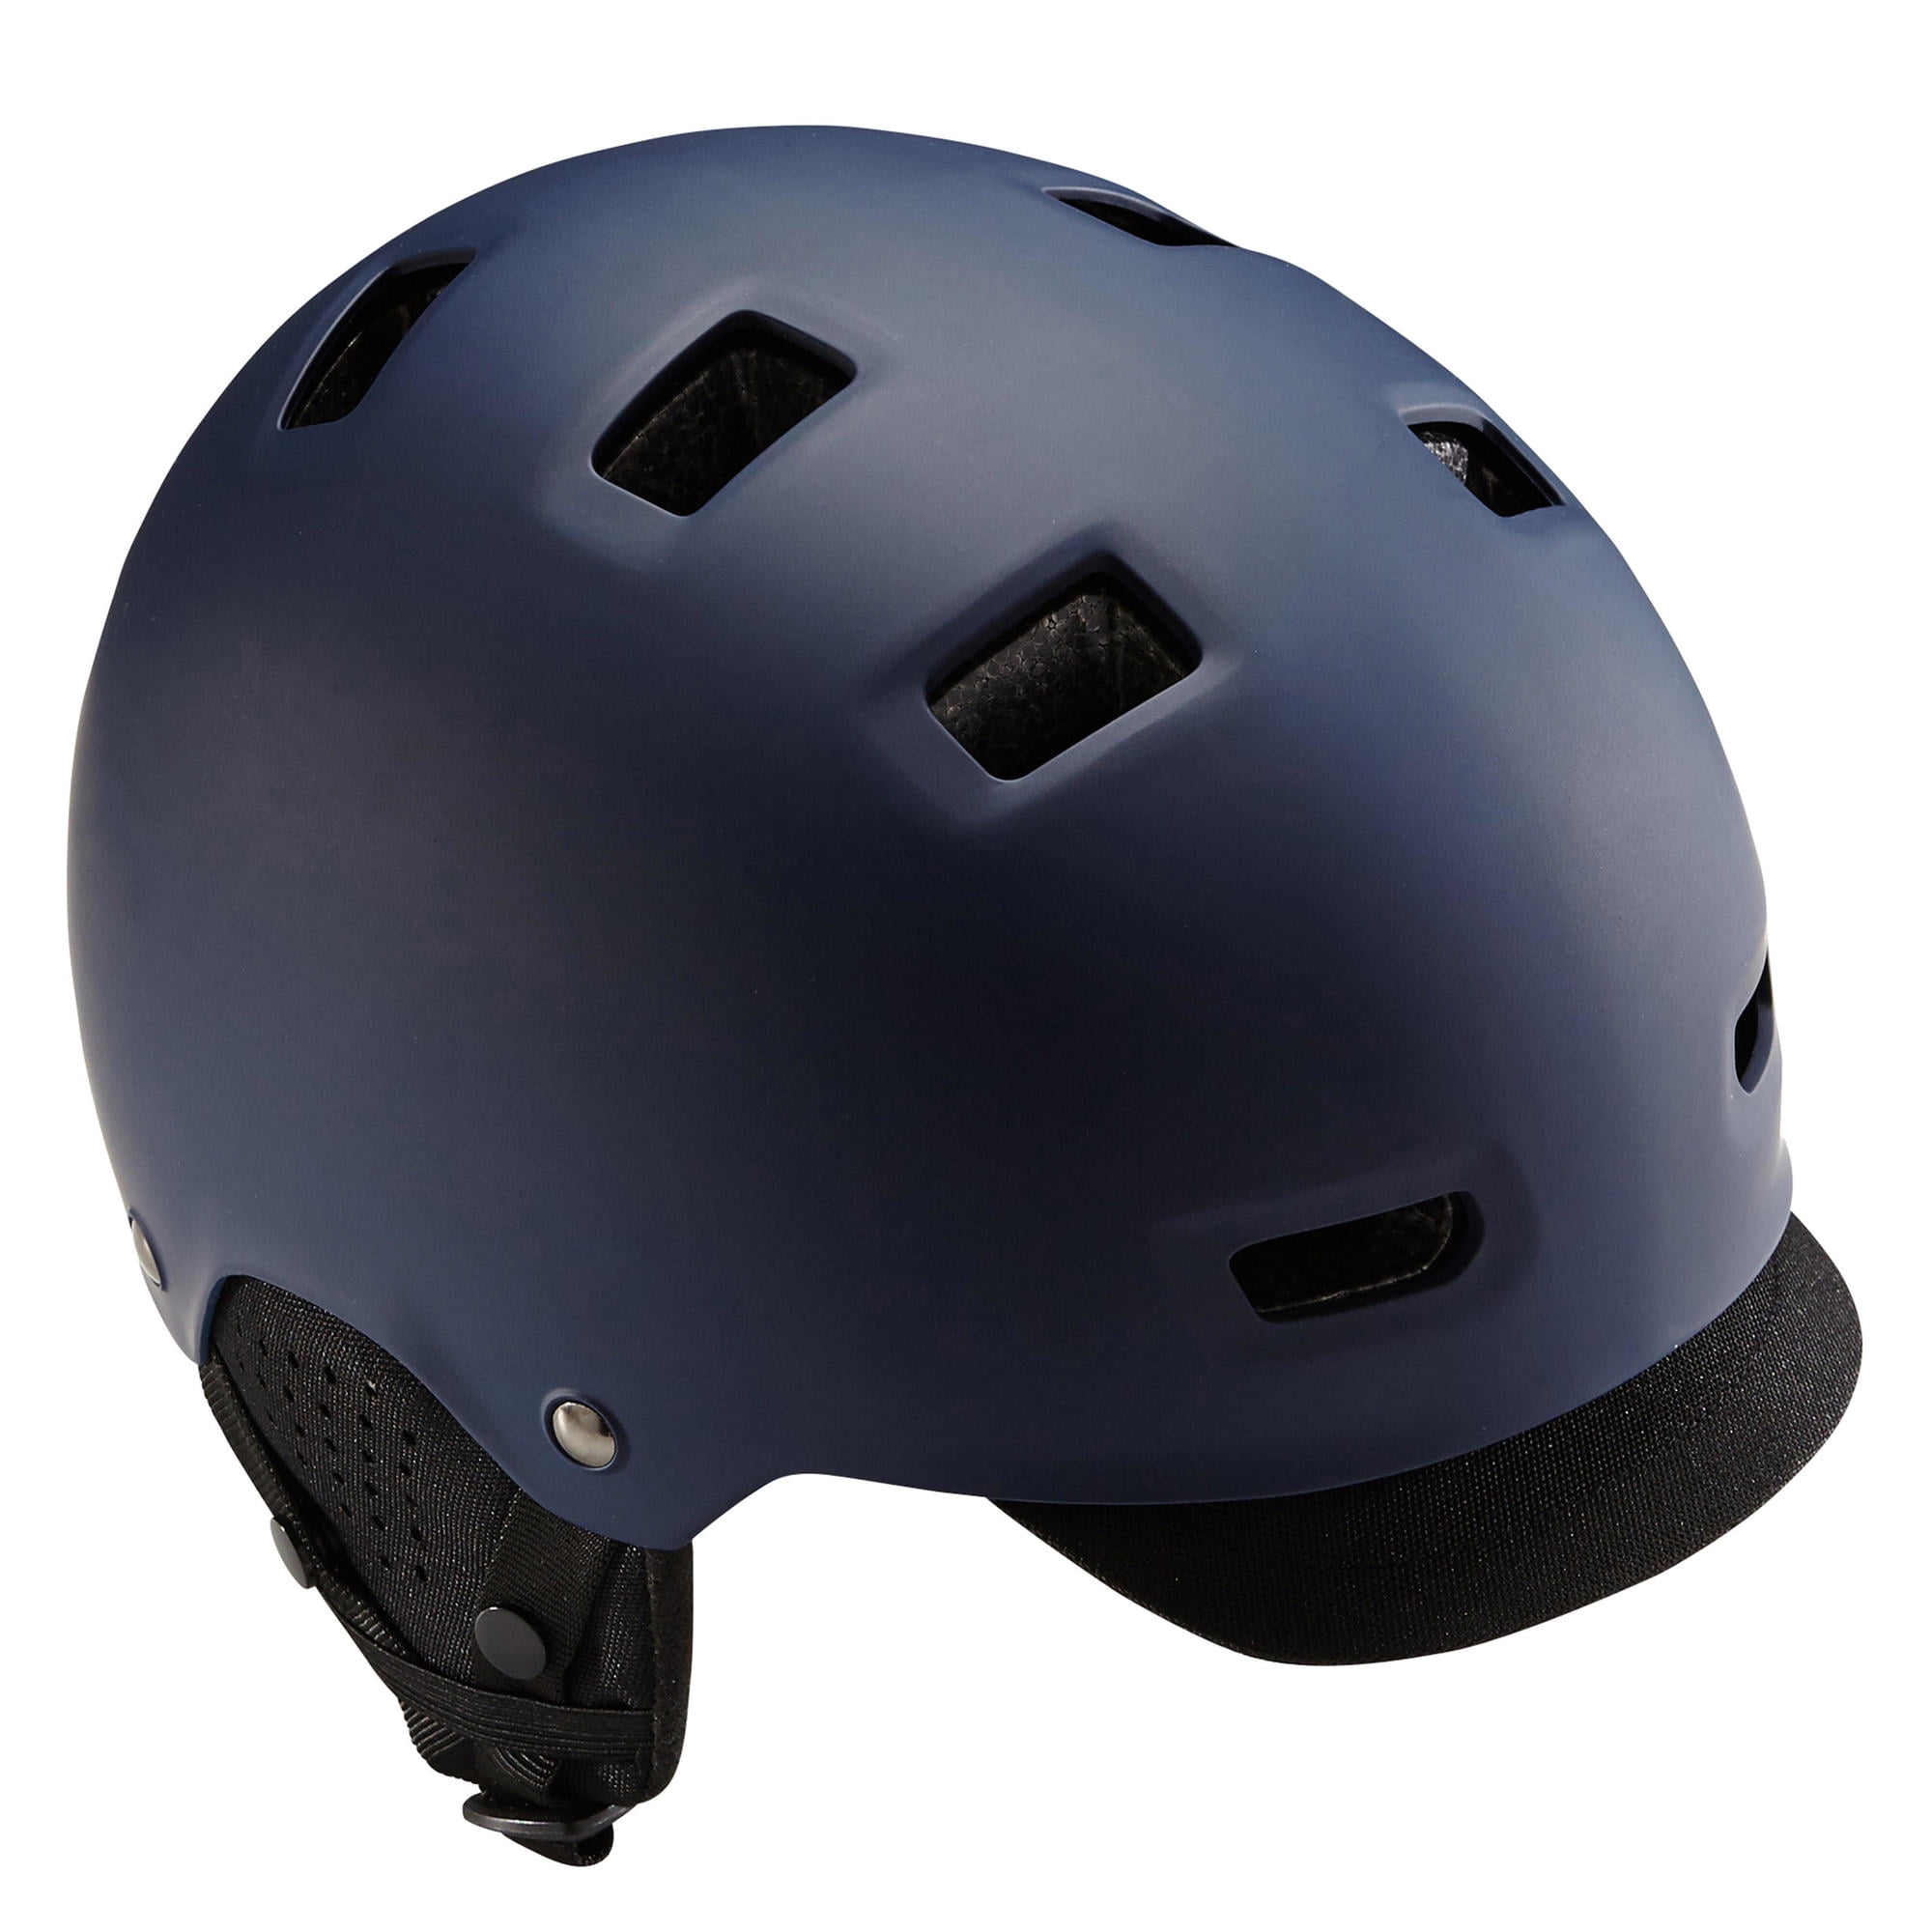 decathlon helmet